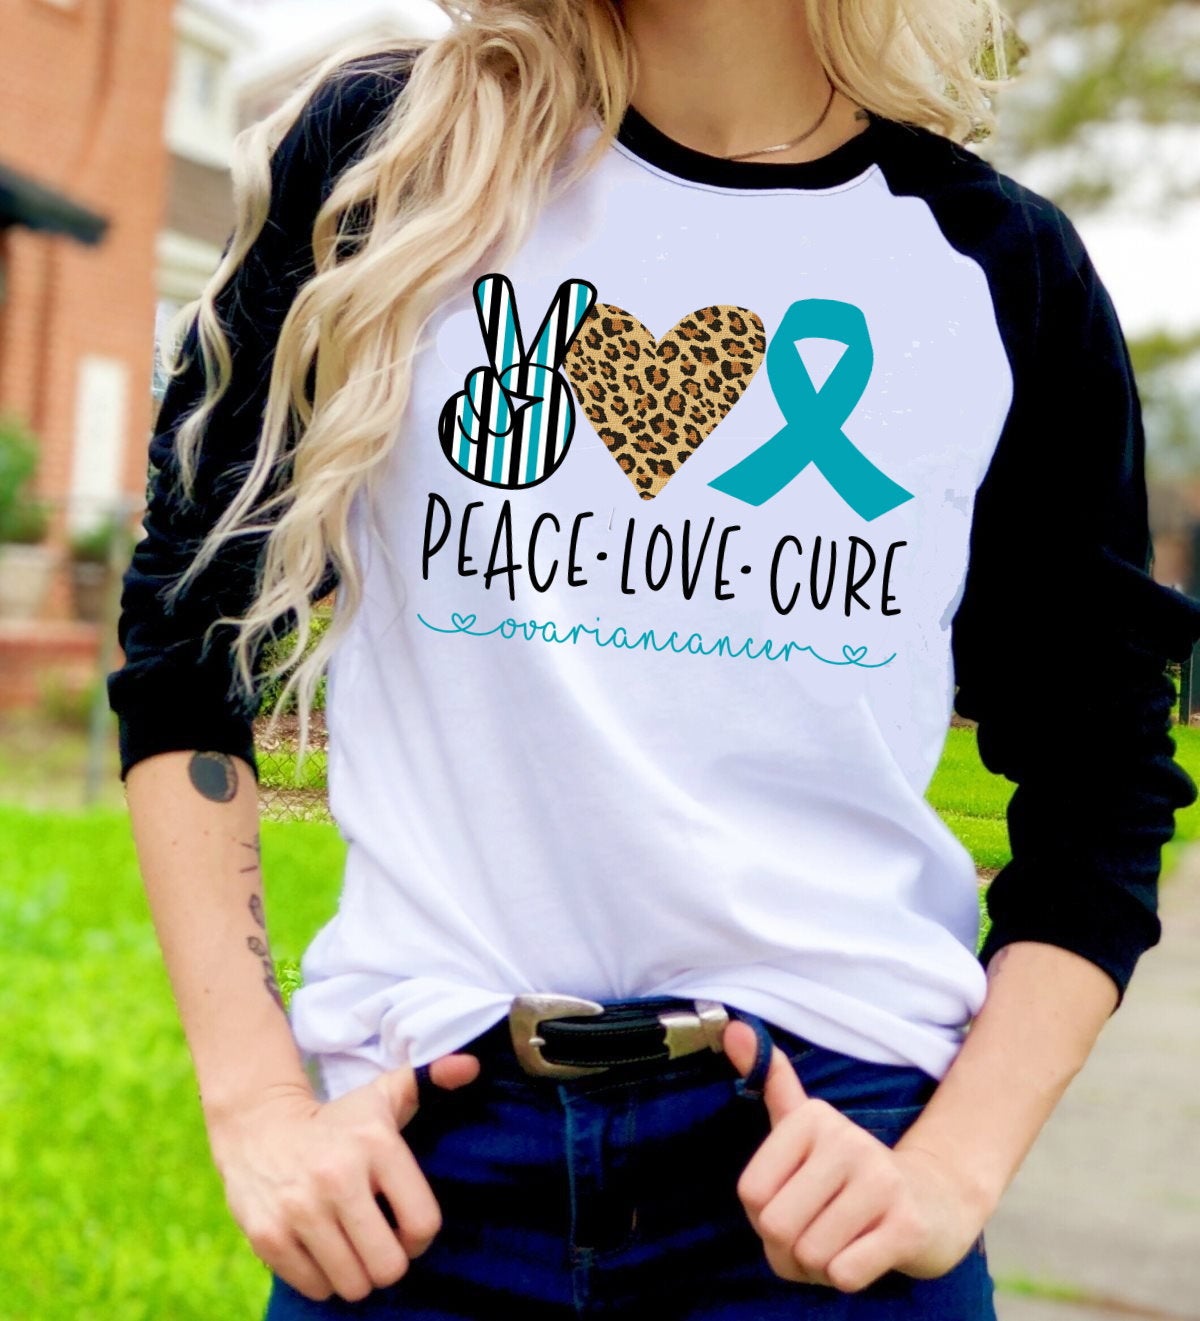 Peace Love Cure Ovarian Cancer Awareness Adult Kids Toddler Baby Shirt Tee Raglan shirt